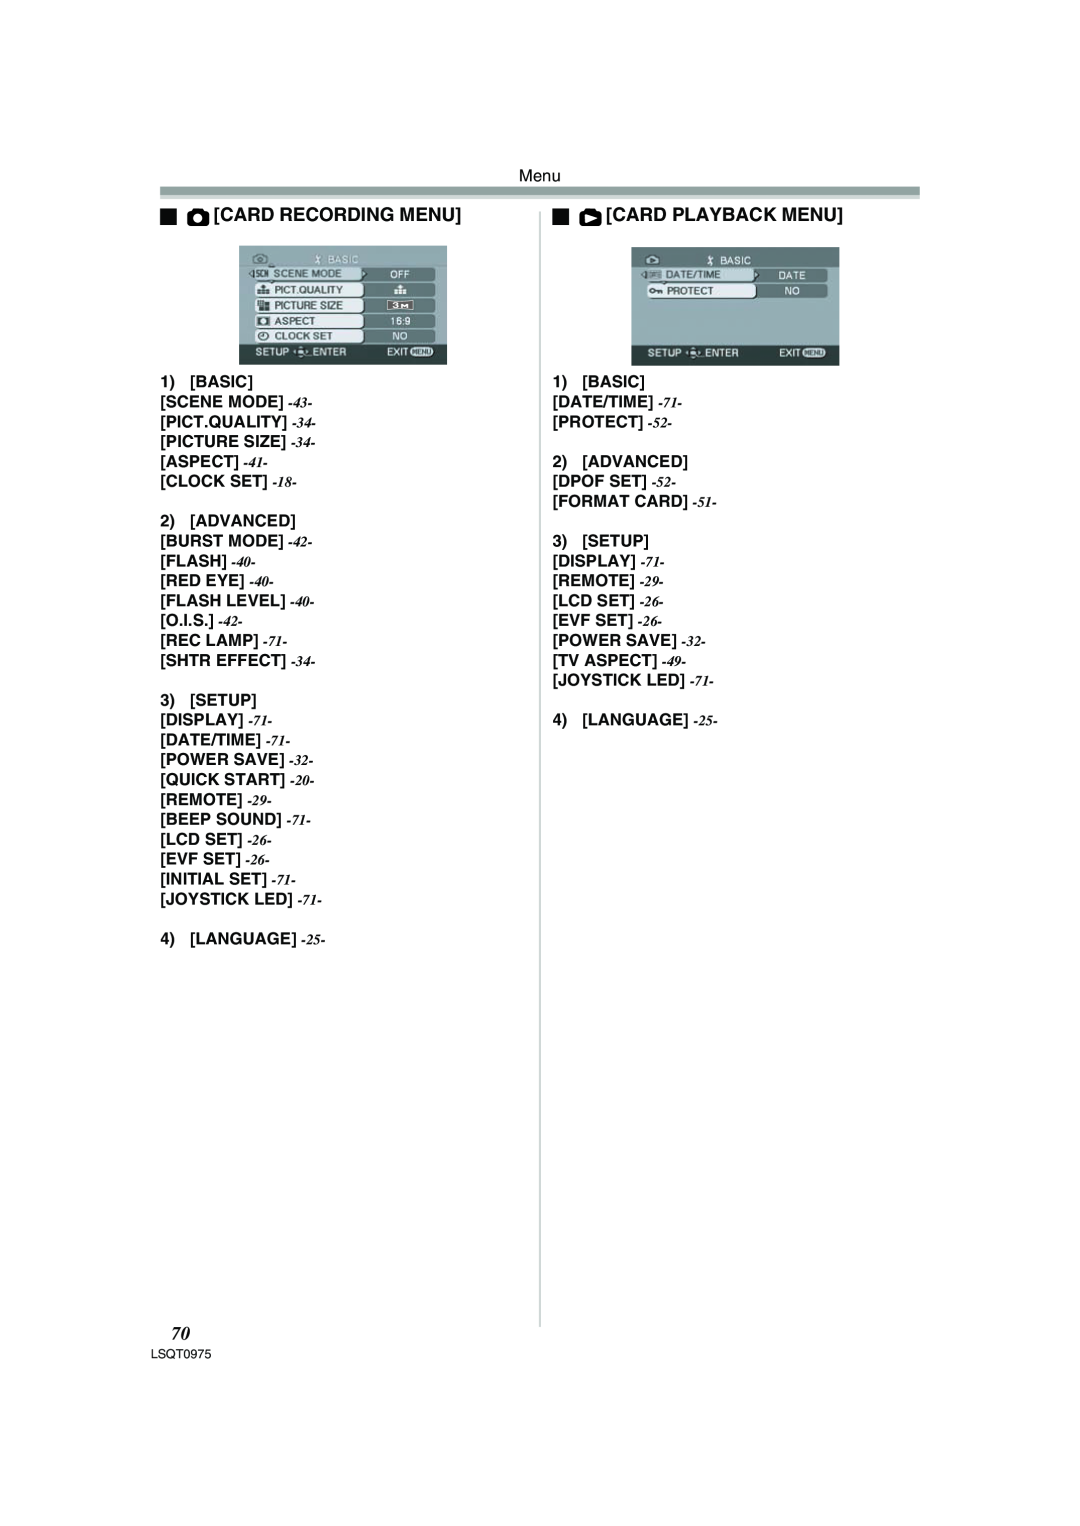 Panasonic PV-GS500 operating instructions ª Card Recording Menu, ª Card Playback Menu, REC LAMP -71- SHTR EFFECT, Language 